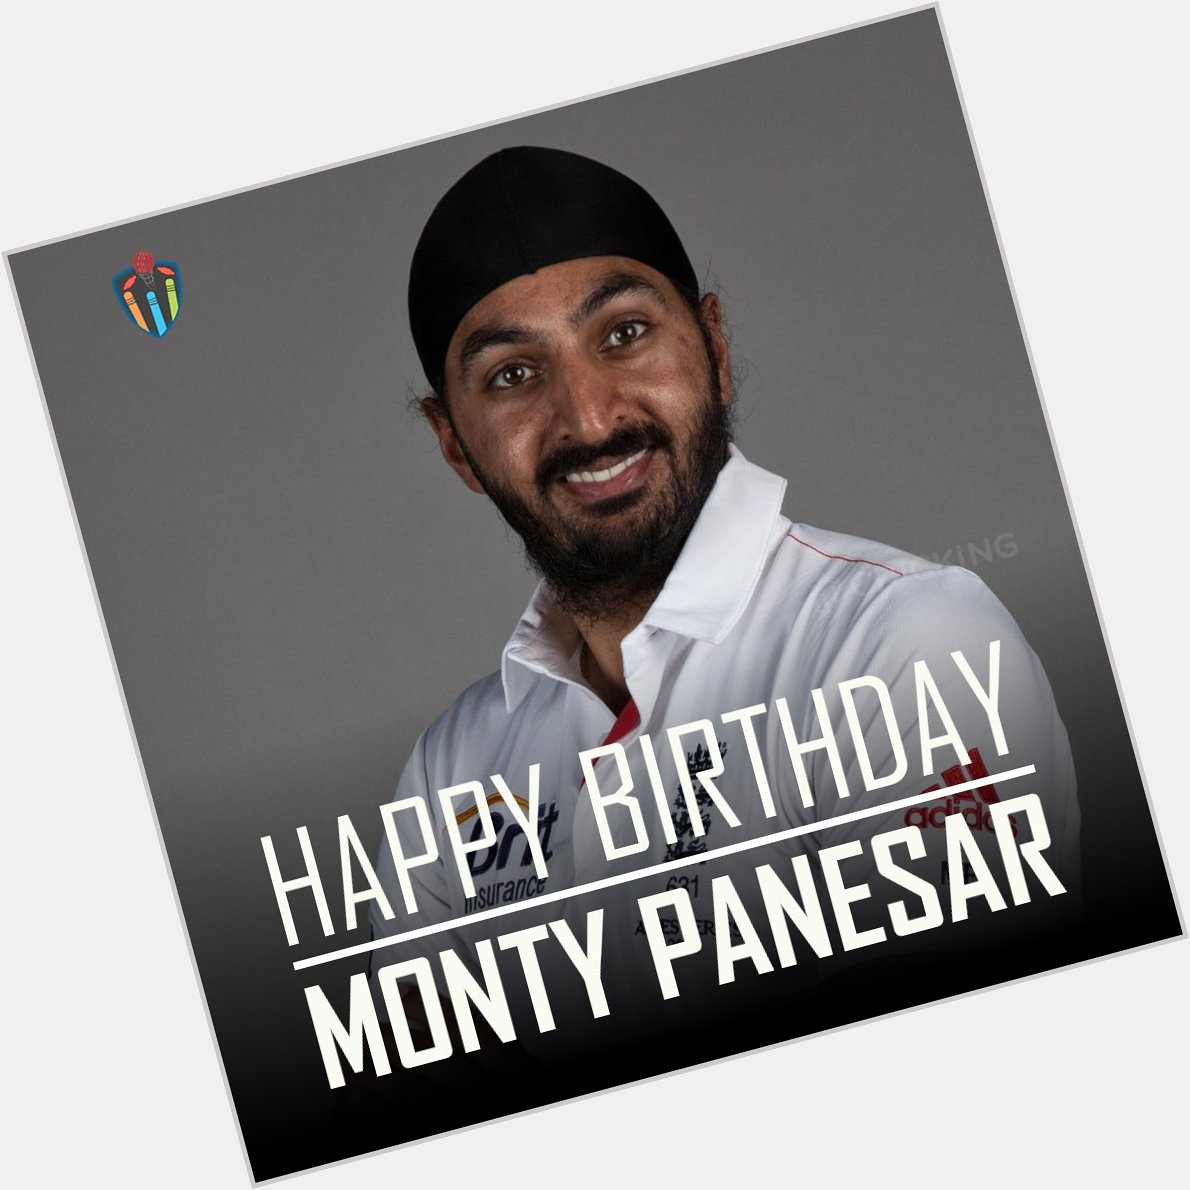 Happy Birthday Monty Panesar. The English cricketer turns 35 today. 